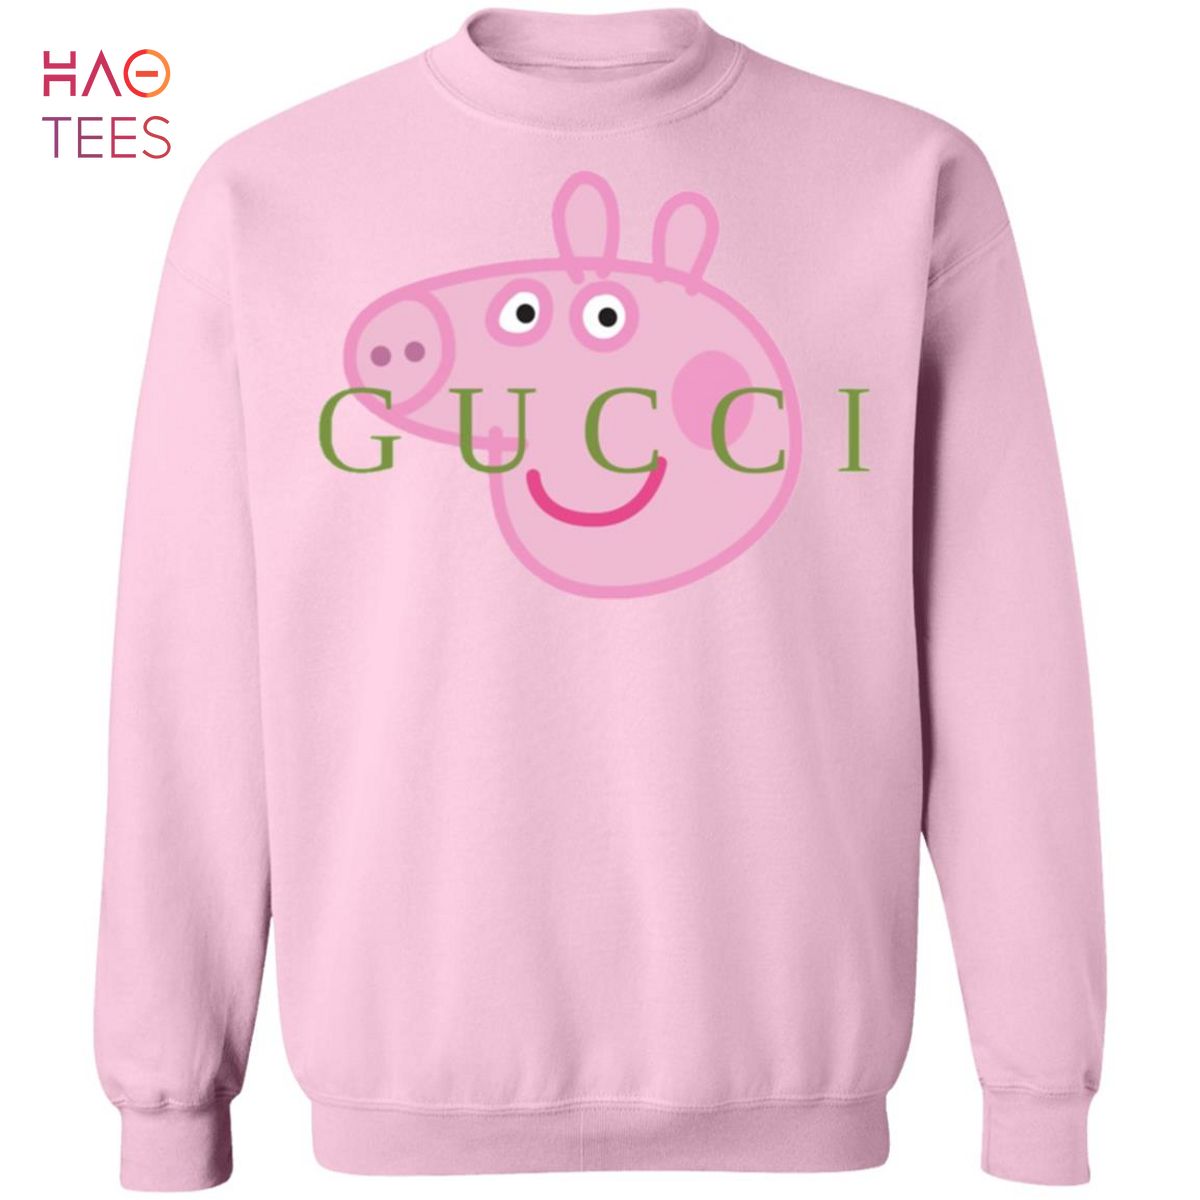 Gucci Pig Sweater